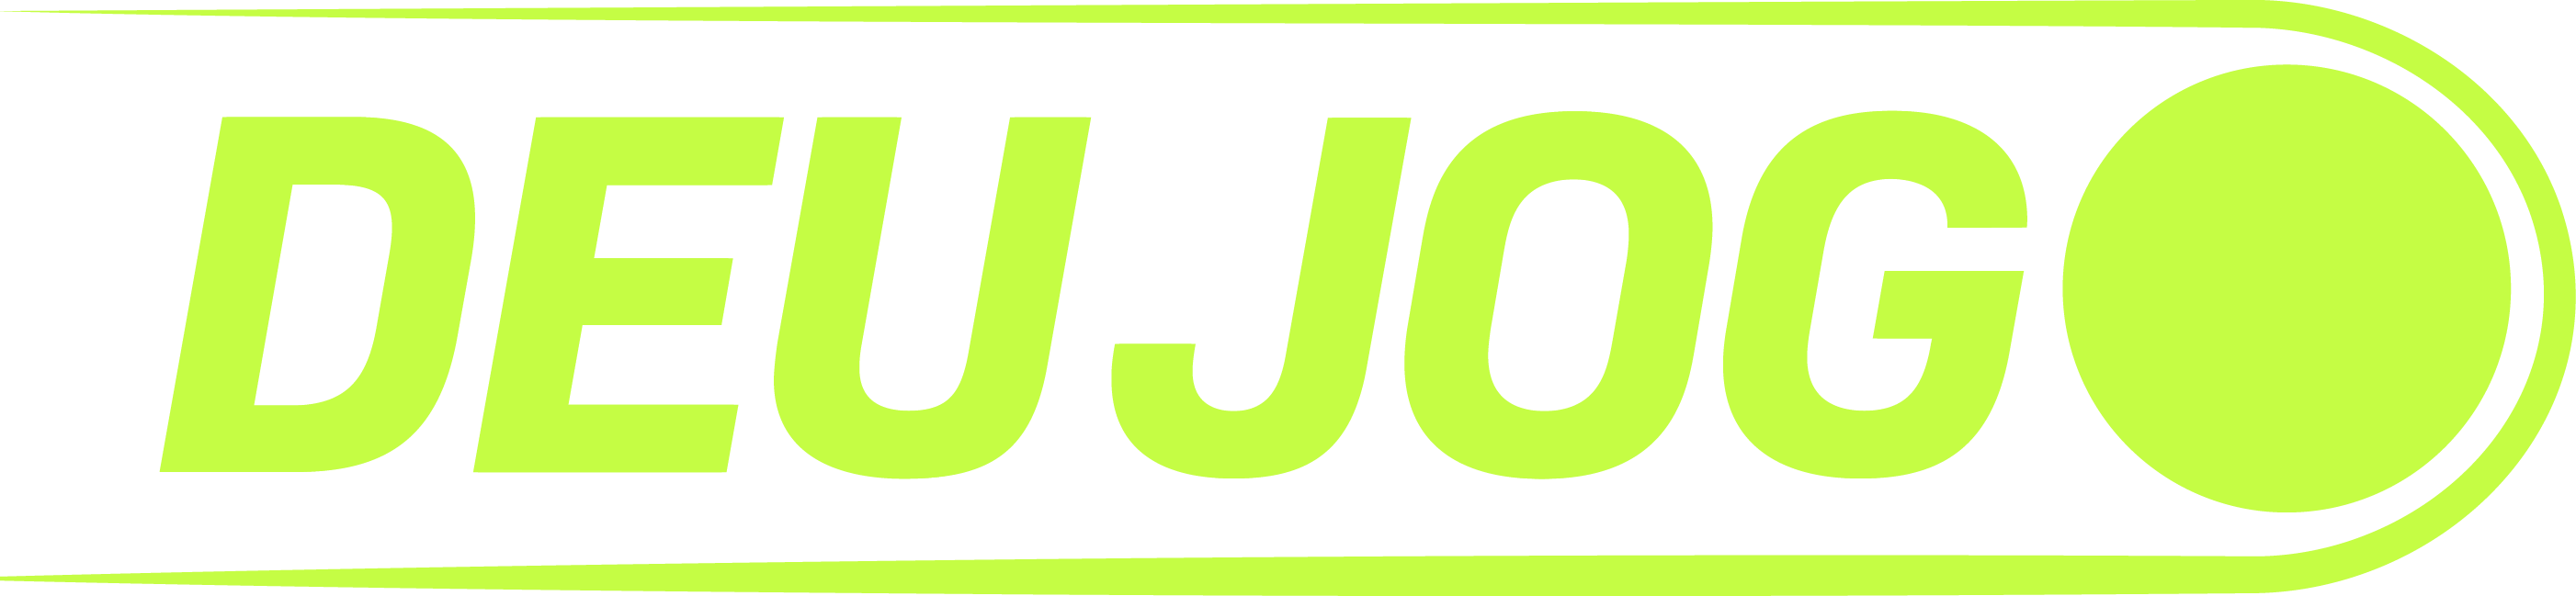 Logo DeuJogo